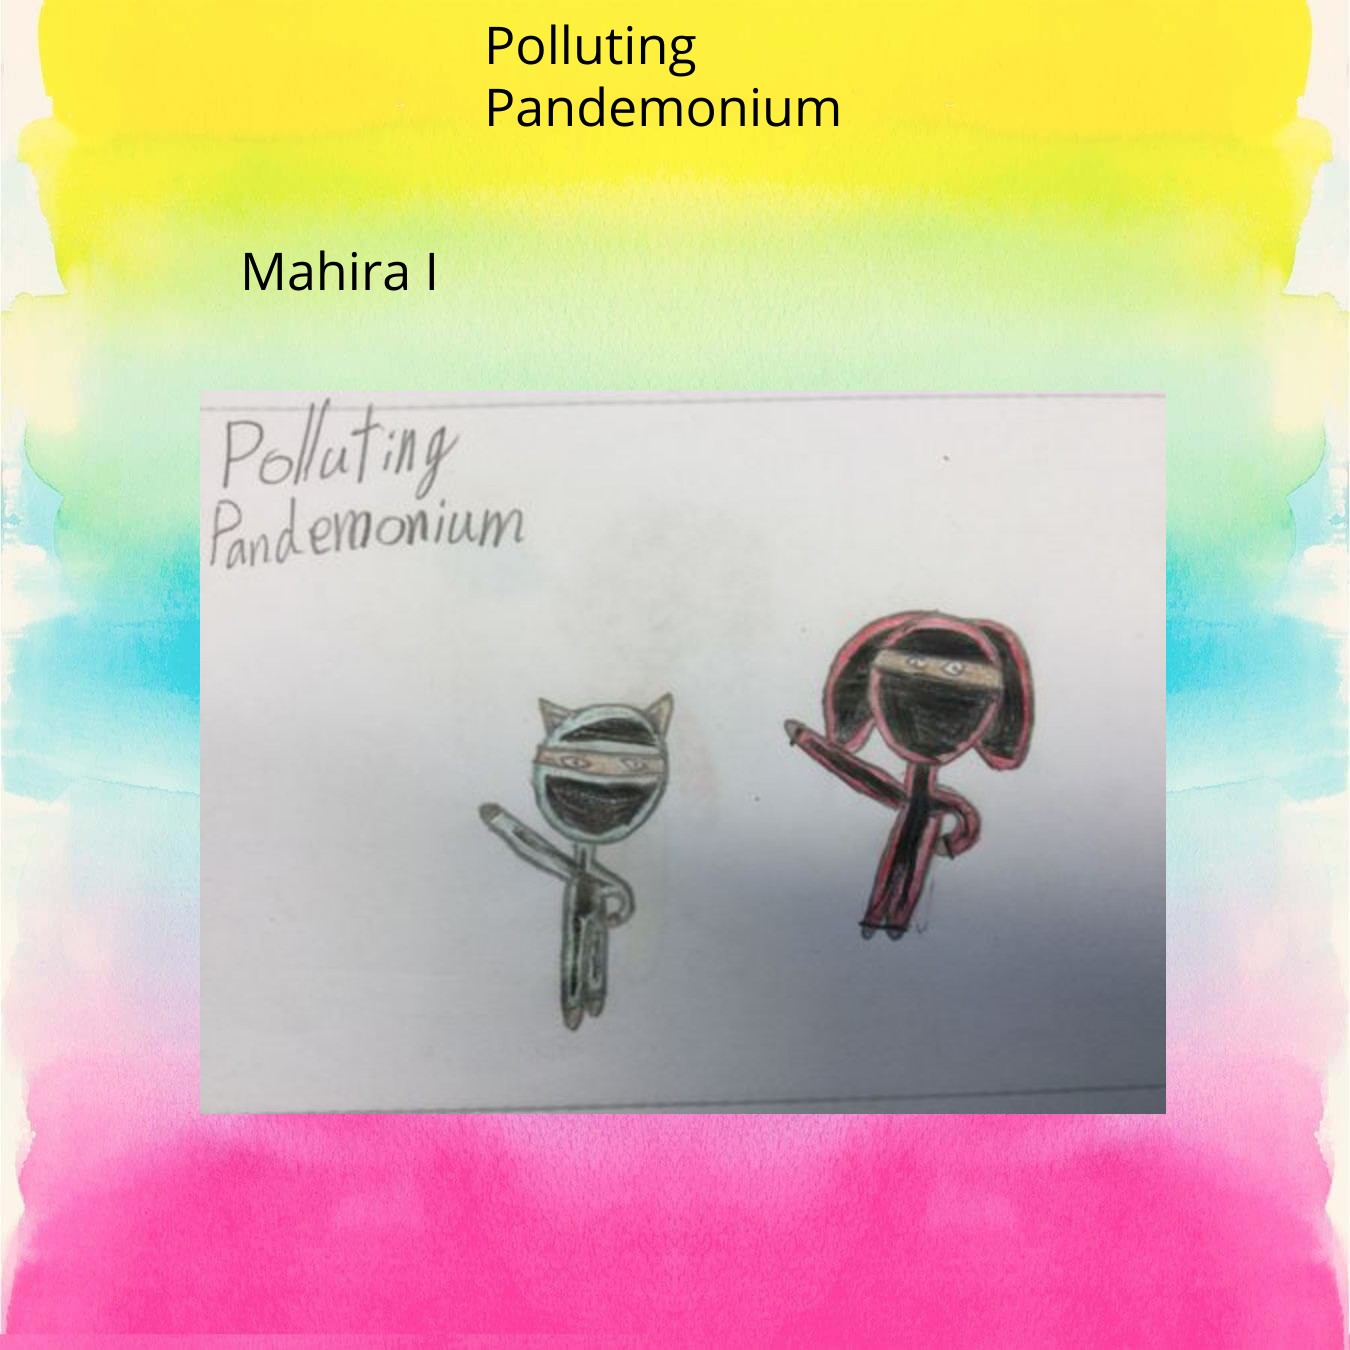 Polluting Pandemonium by Mahira I.